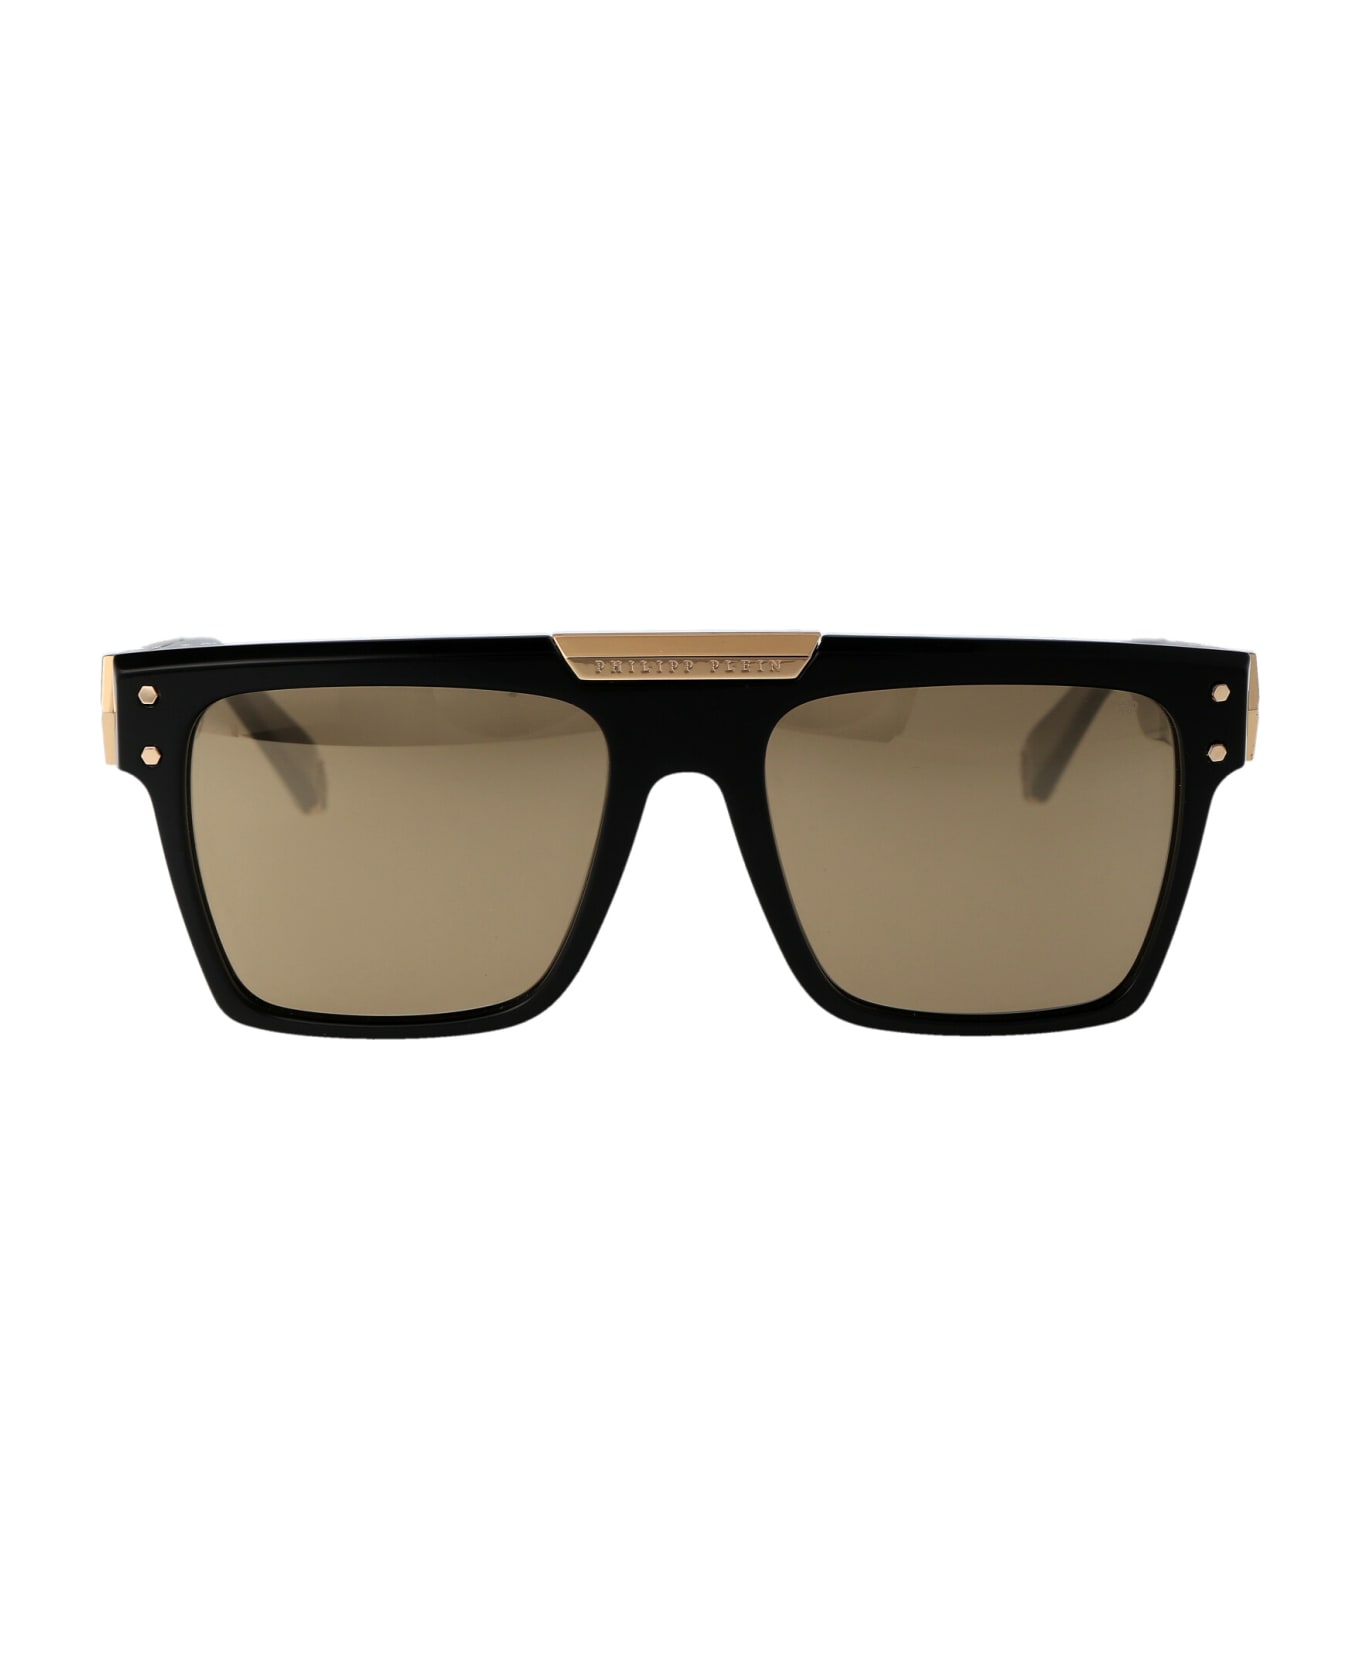 Philipp Plein Spp080 Sunglasses - 700G BLACK サングラス